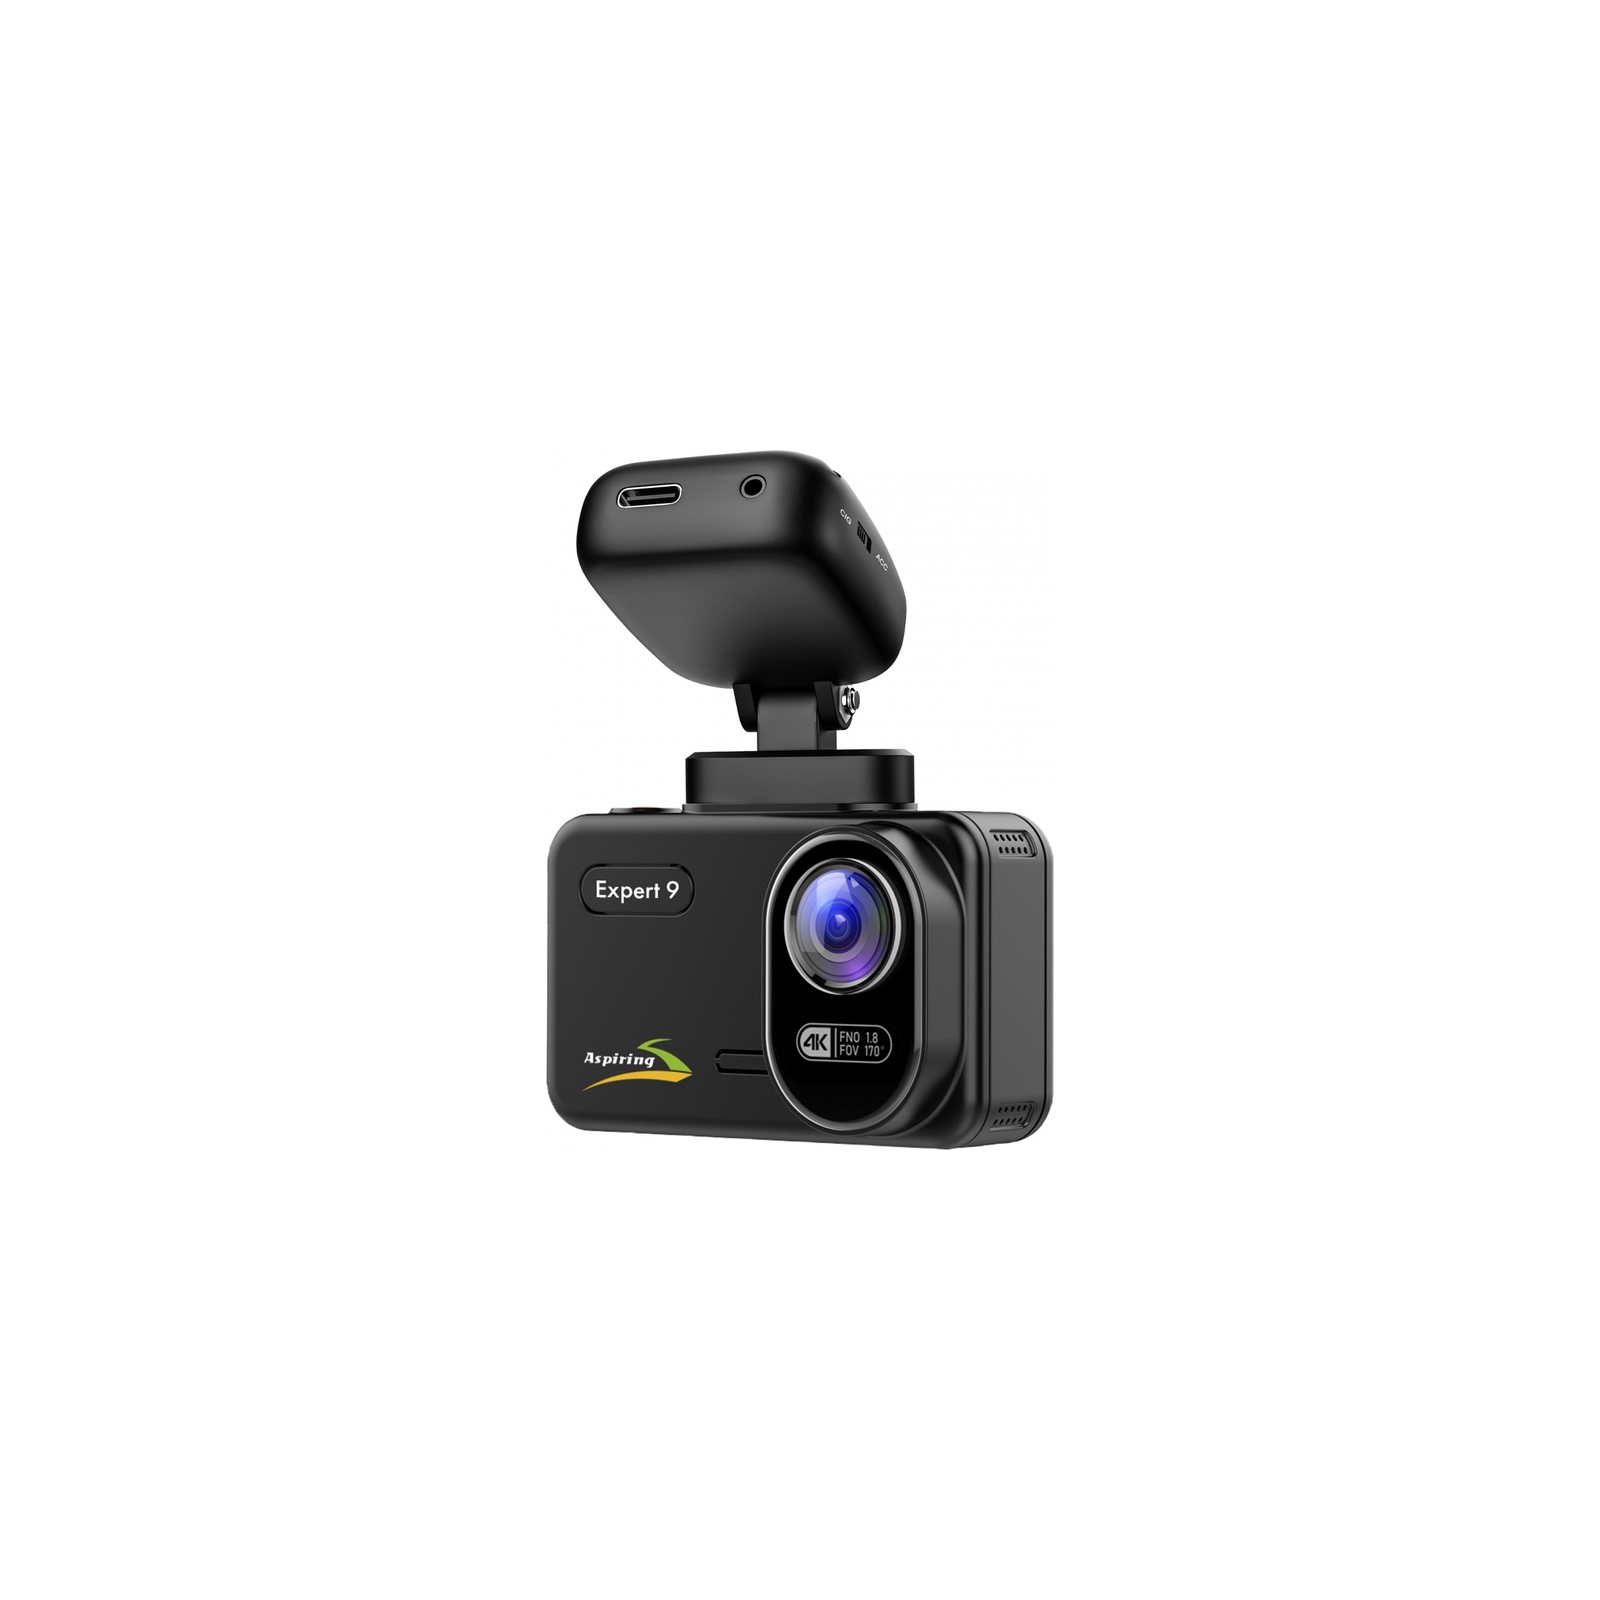 Відеореєстратор Aspiring Expert 9 Speedcam, WI-FI, GPS, 2K, 2 cameras (Aspiring Expert 9 Speedcam, WI-FI, GPS, 2K, 2 cameras) зображення 3